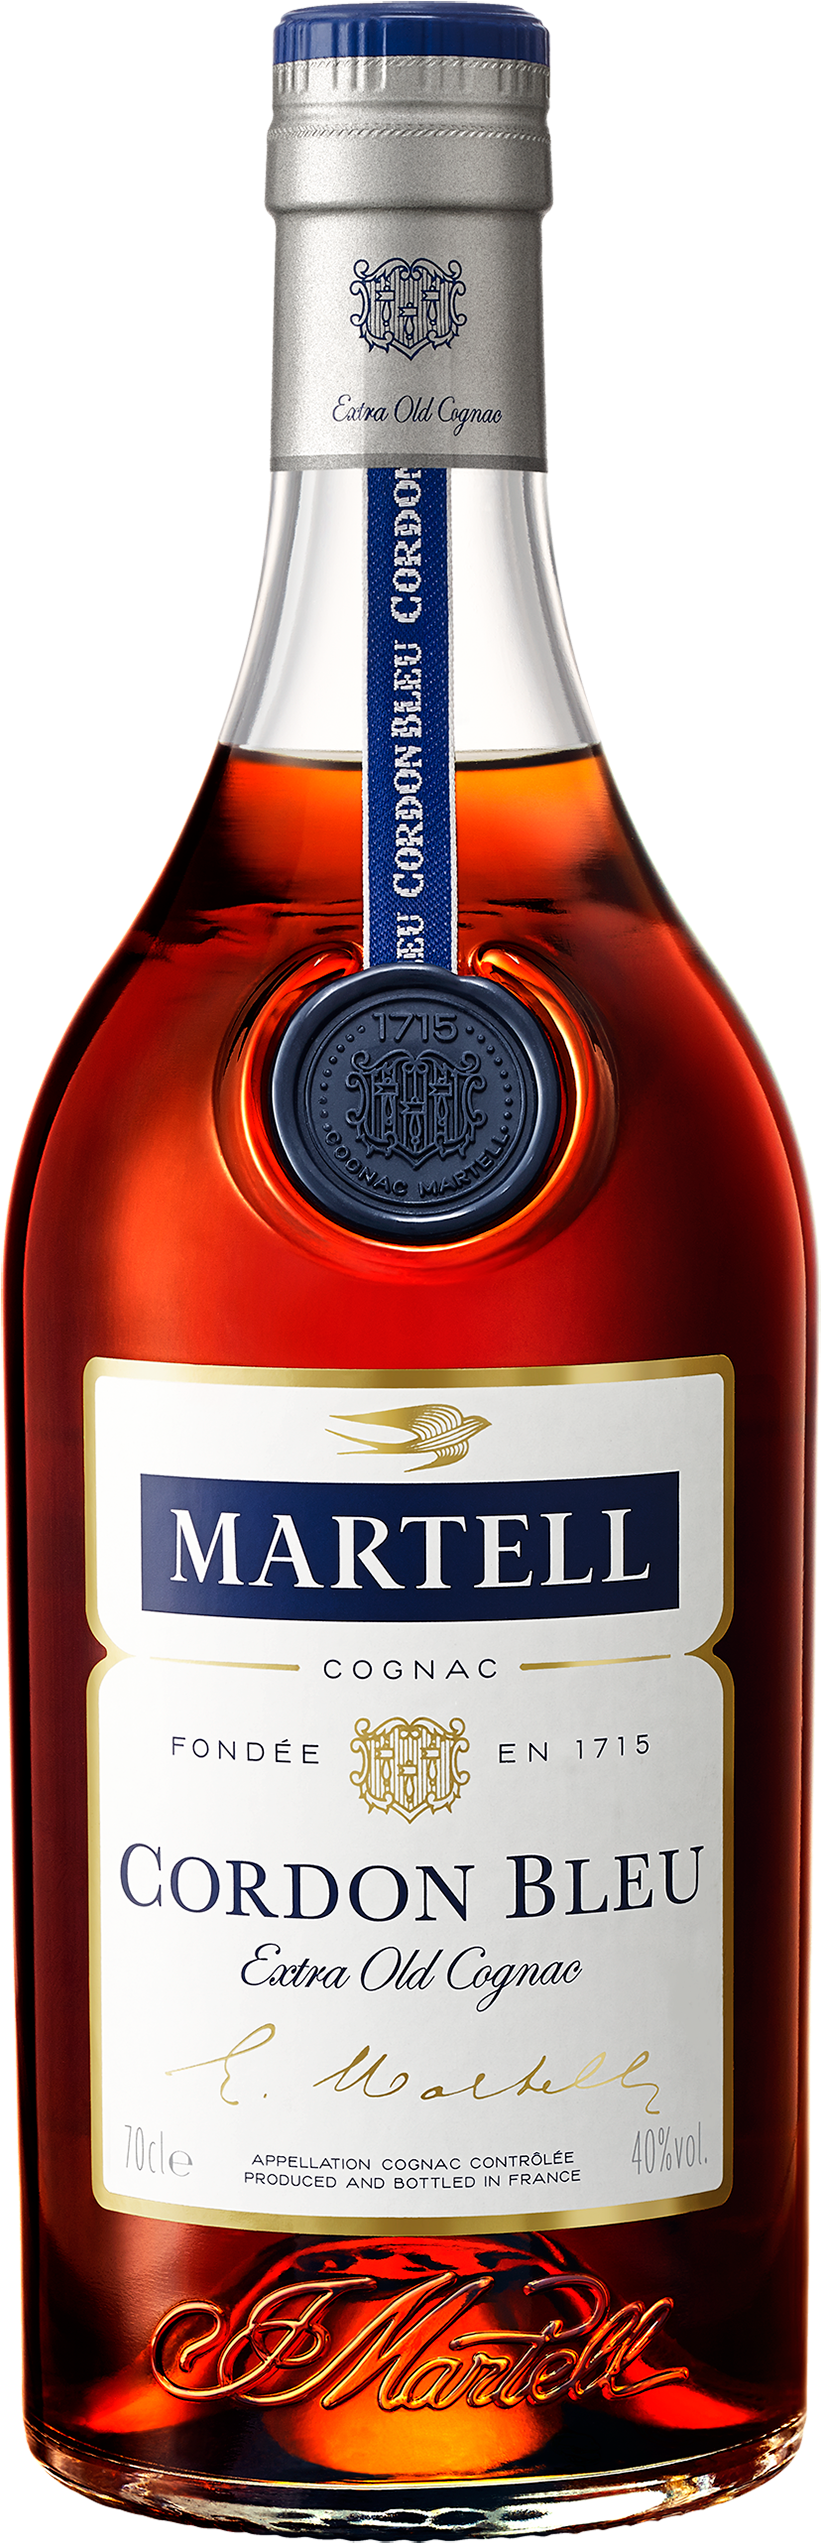 Download Packshot Martell Martell Cordon Bleu Cognac Png Image With No Background Pngkey Com